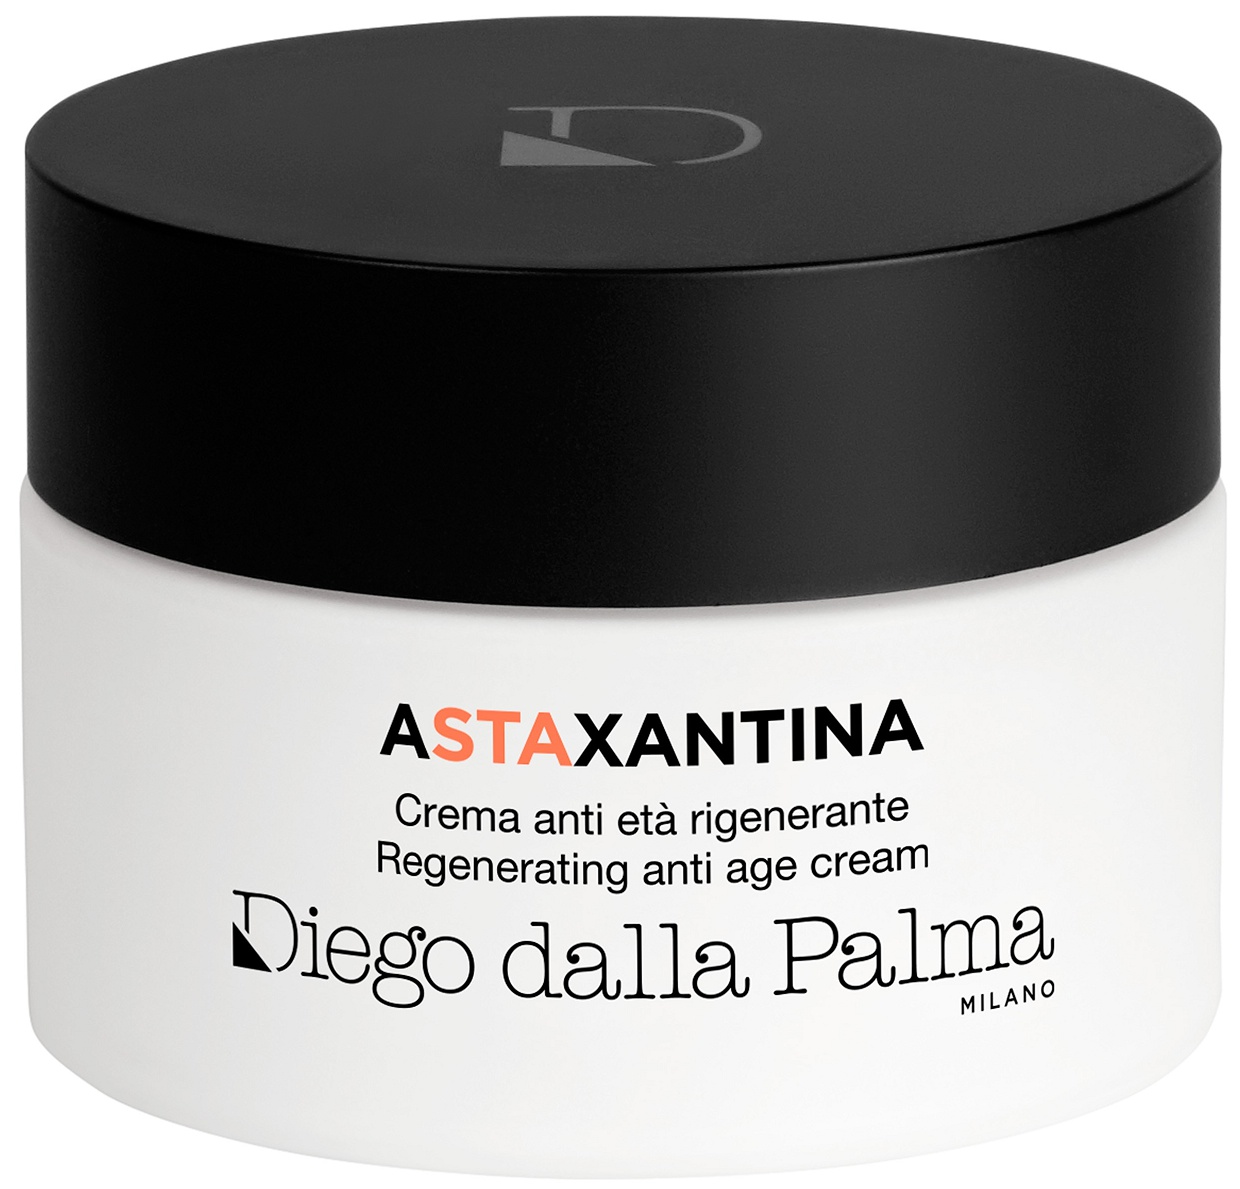 Diego dalla Palma Astaxantina Regenerating Anti Age Cream